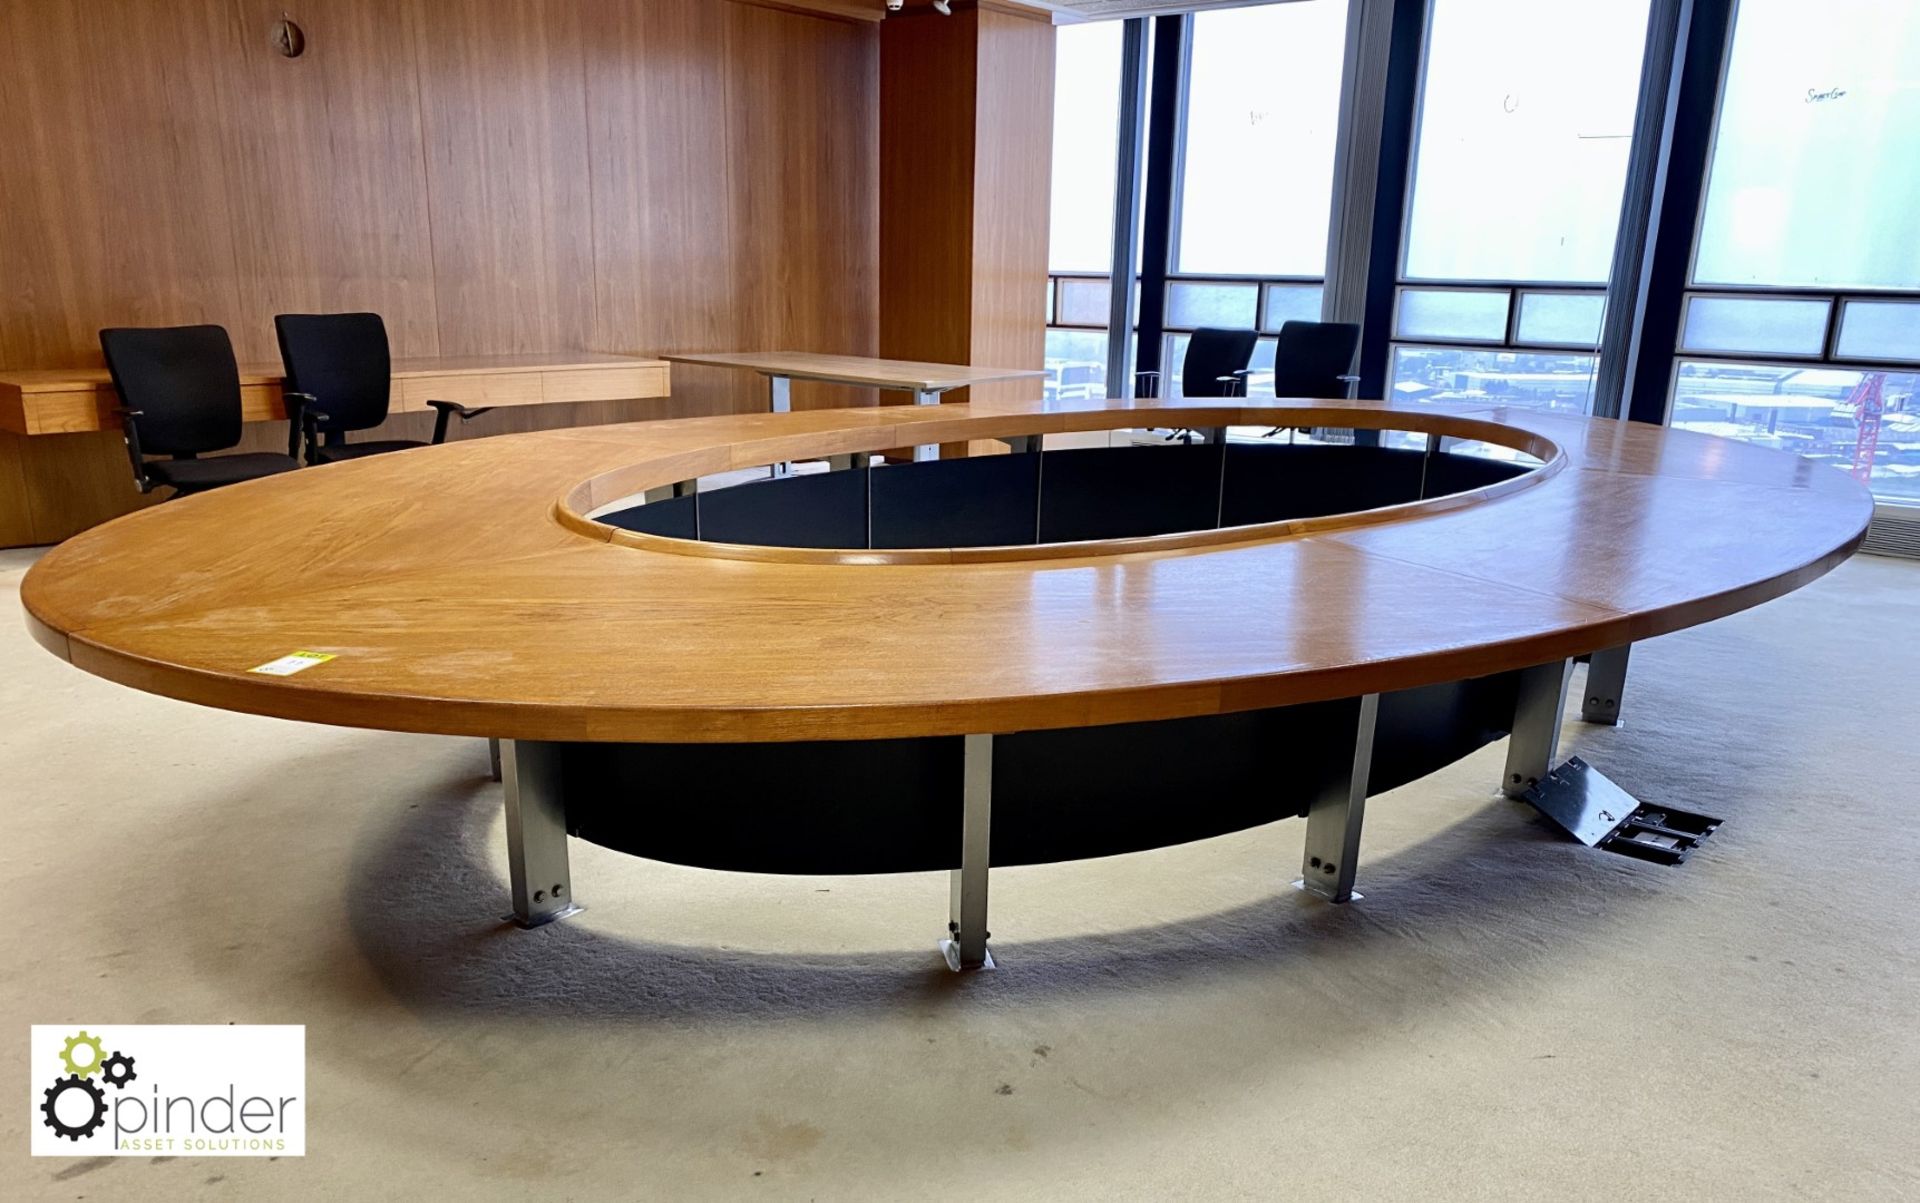 Teak oval Boardroom Table, 5650mm x 3500mm (located in Boardroom on 23rd Floor) - Image 3 of 6